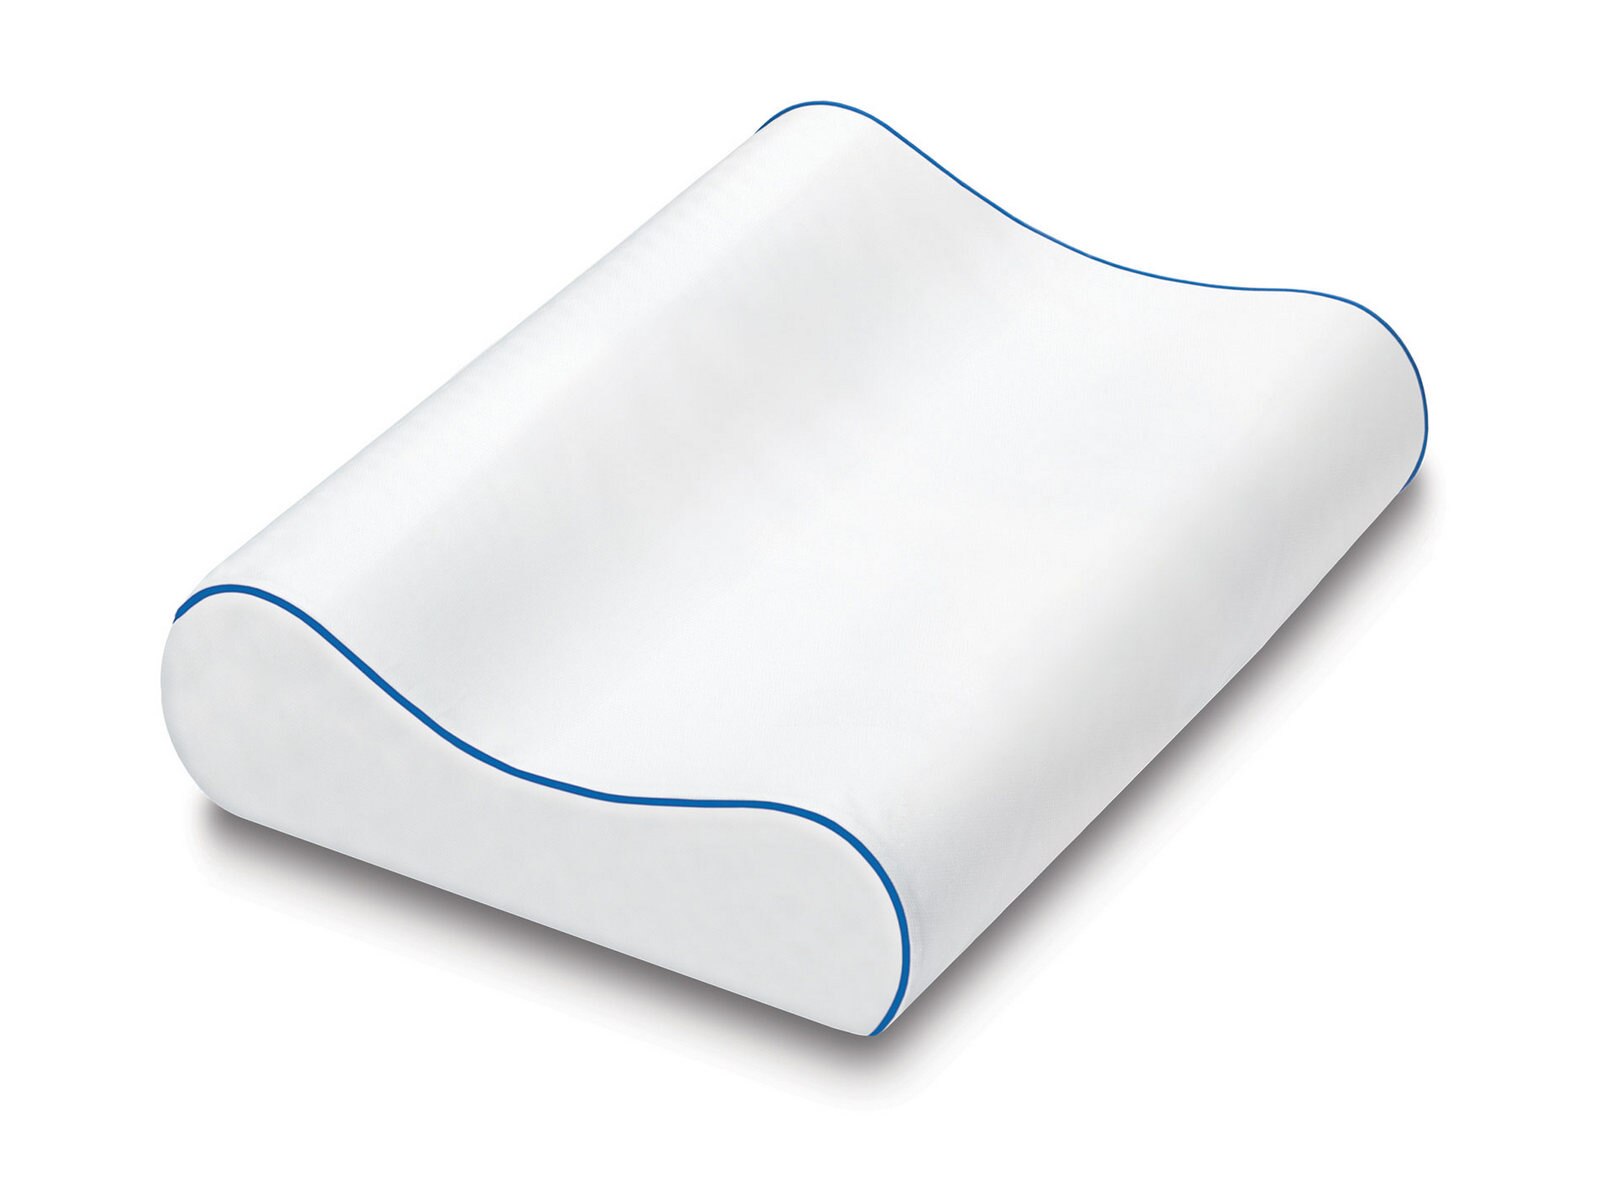 SMUGDESK Gel Memory Foam Contour Pillow Neck Pillows for Pain